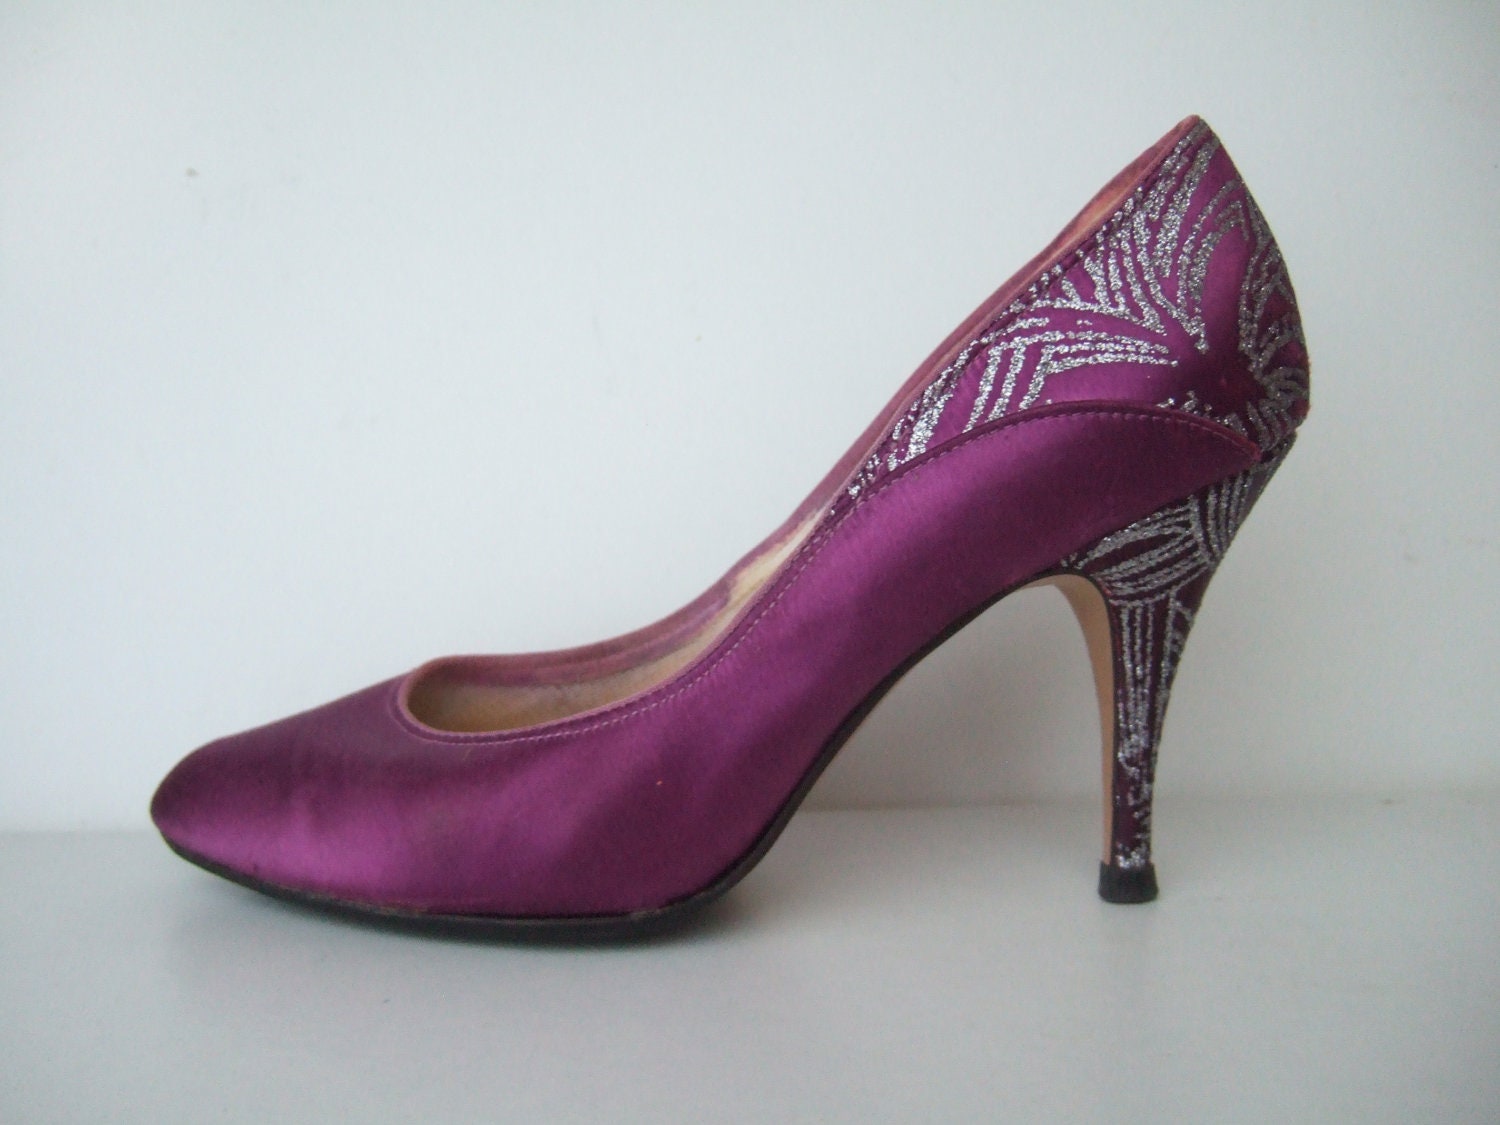 Vintage 1980s shoes / purple satin stiletto pumps with silver glitter heels UK 6 EU 39 US 8 - StellaRoseVintage